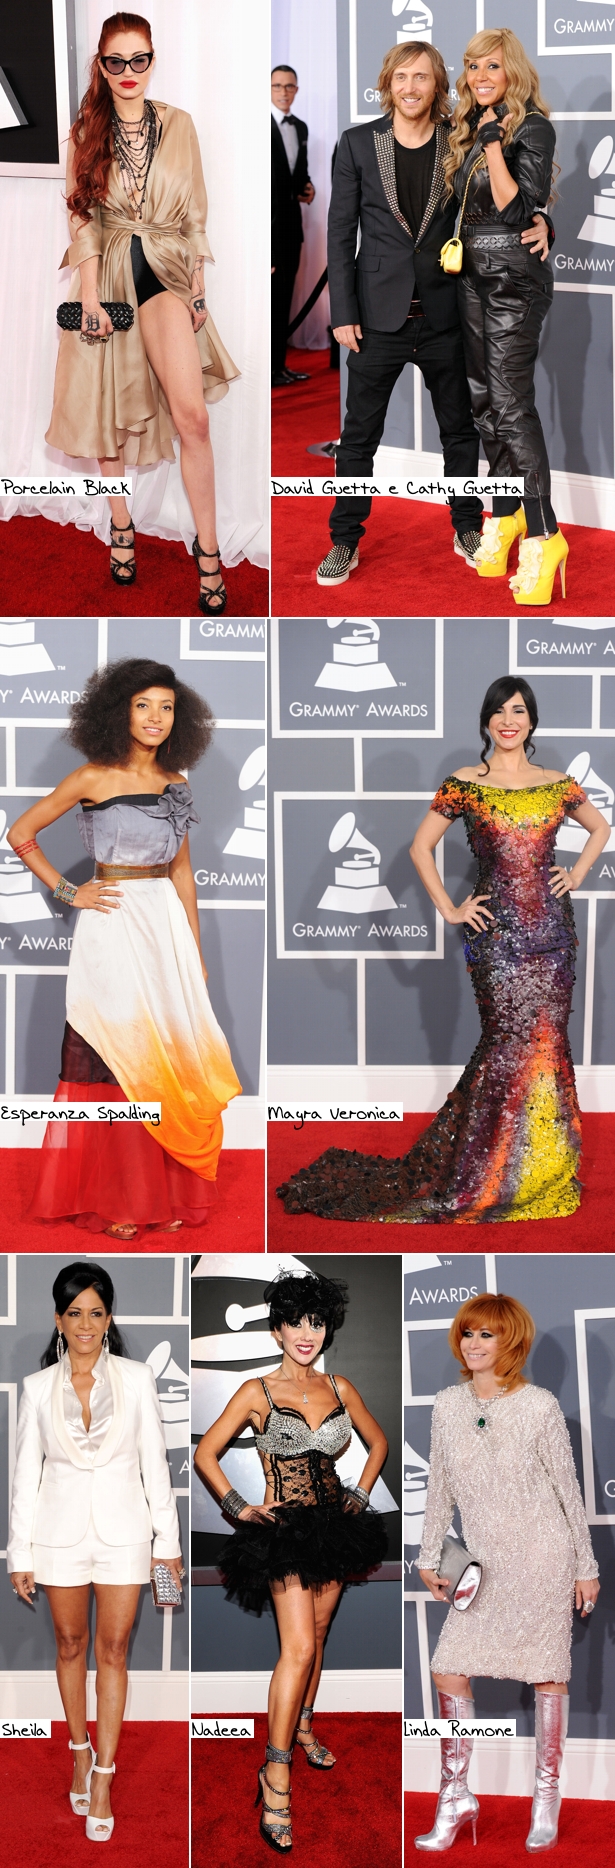 Grammy Lixuosos2 Grammy Awards: Luxuosos X Lixuosos